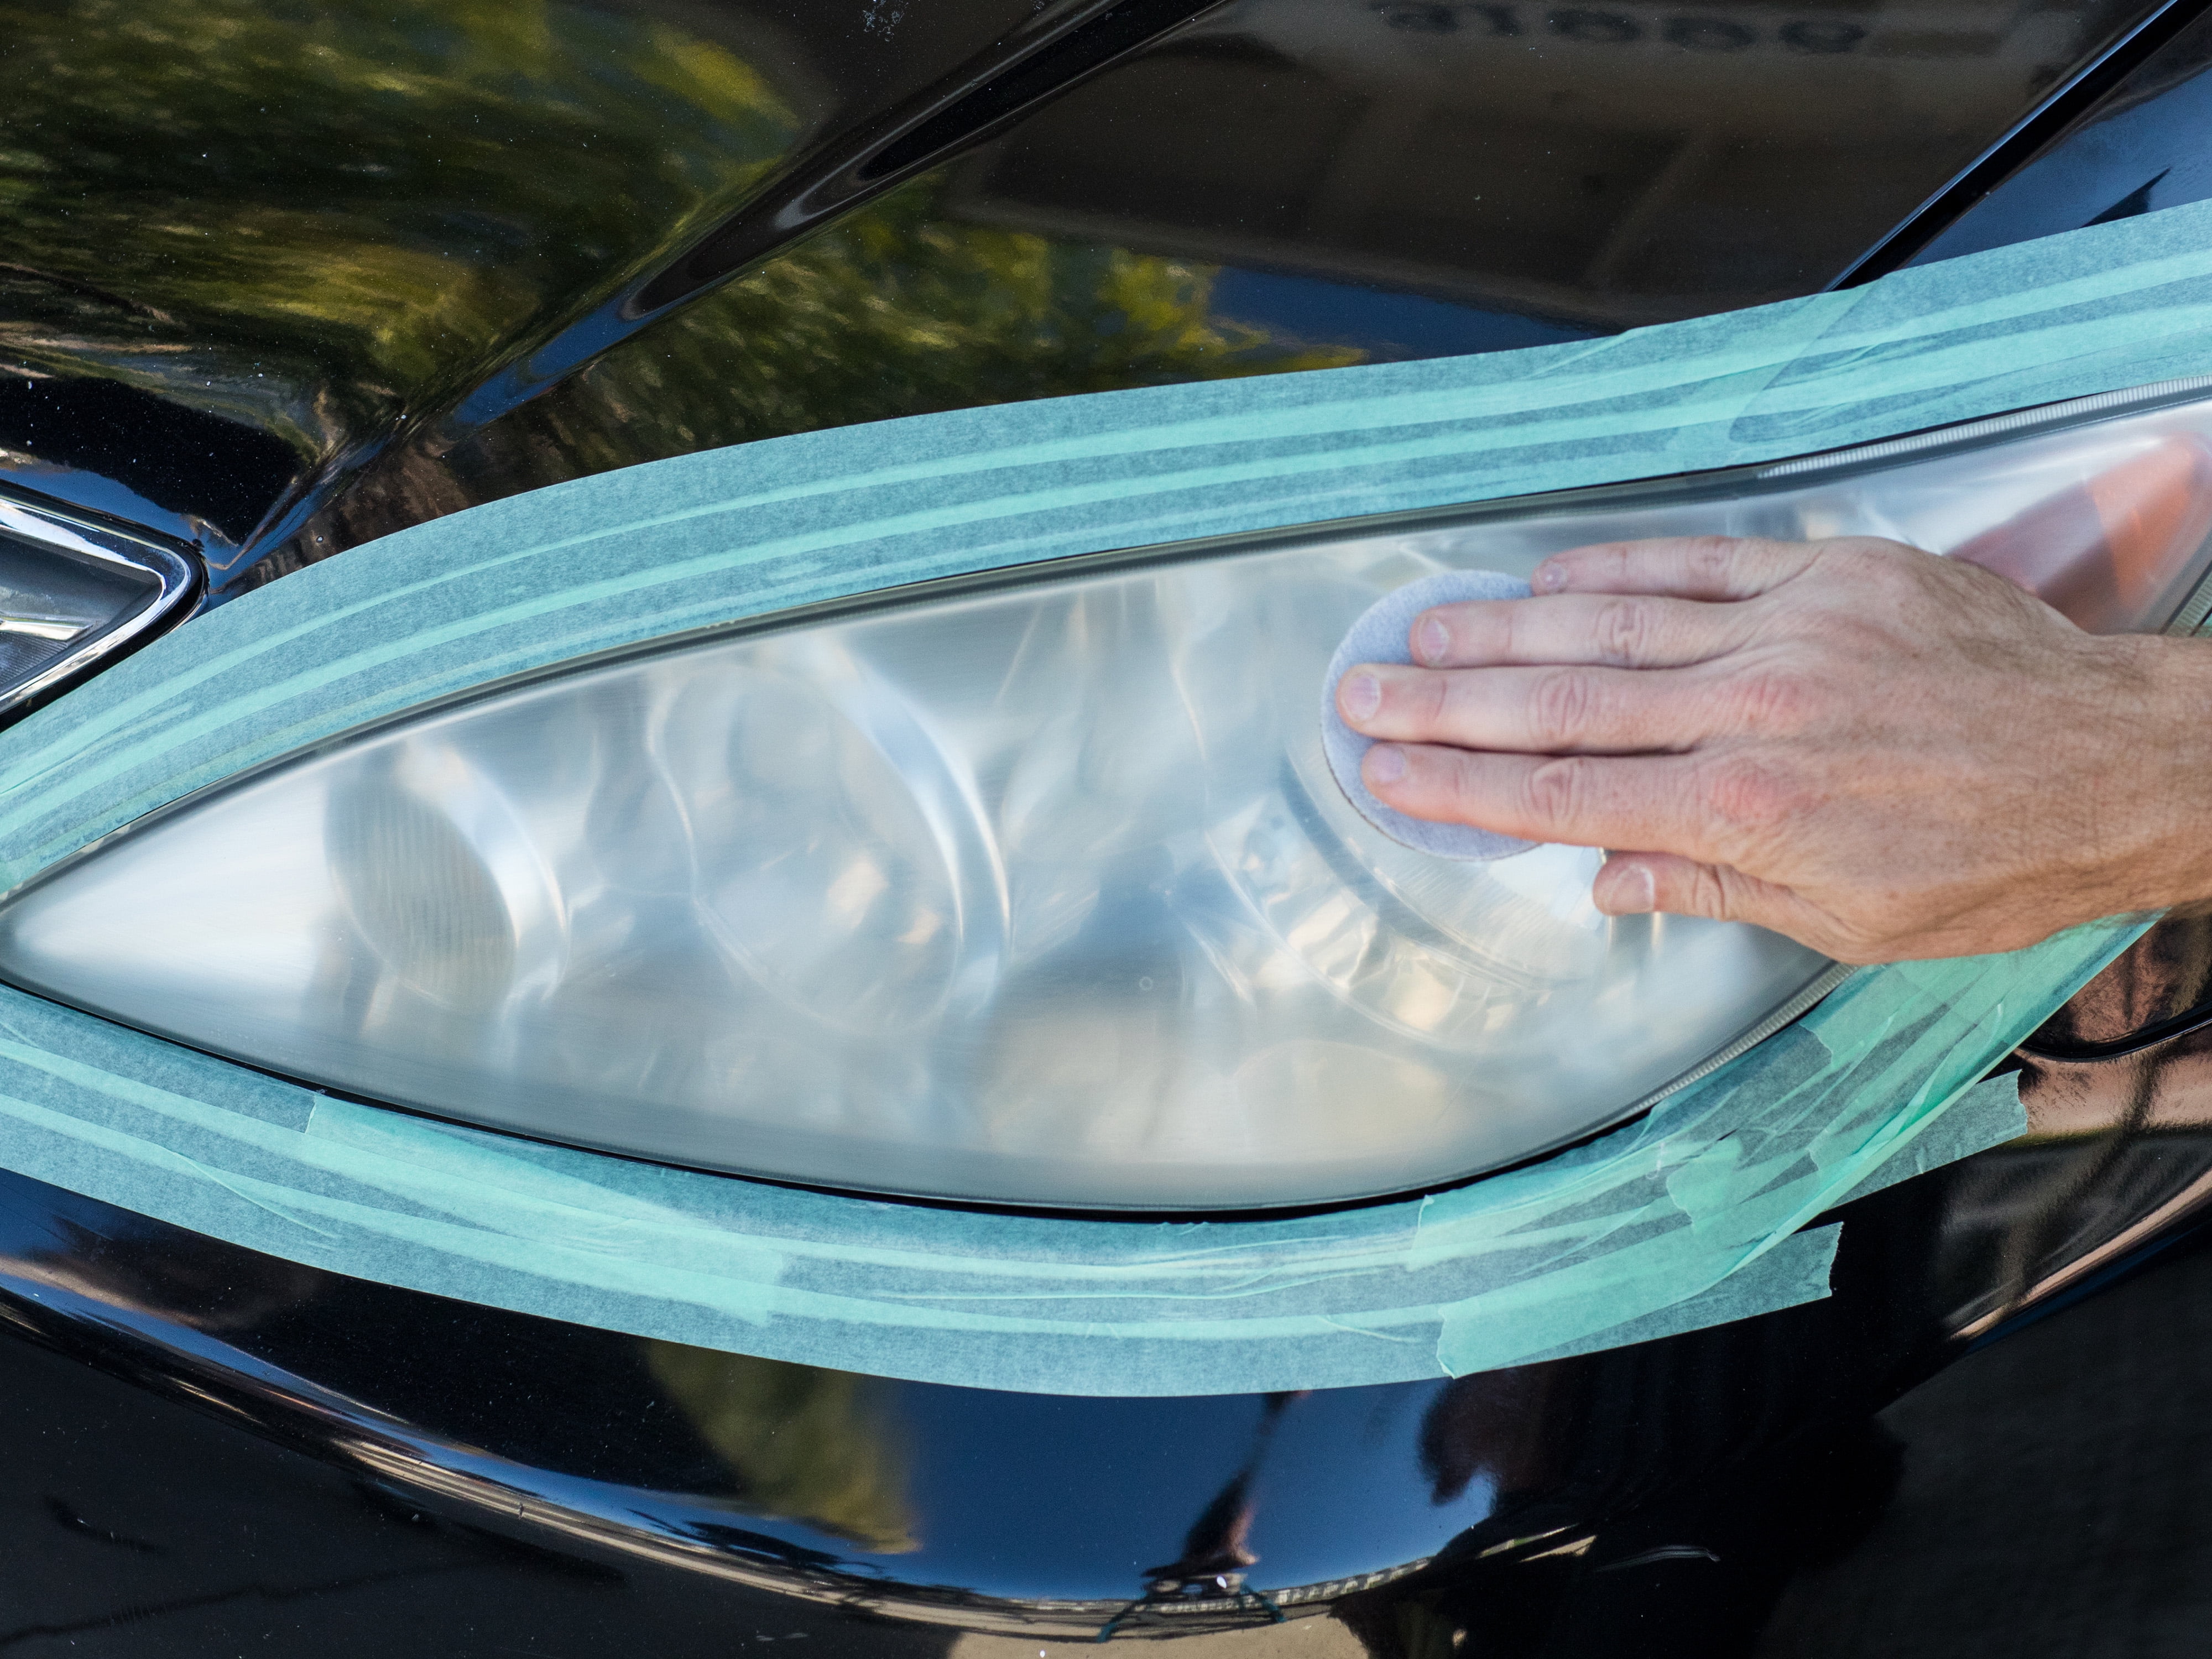 Car Headlight Restorer Kit - Inspire Uplift